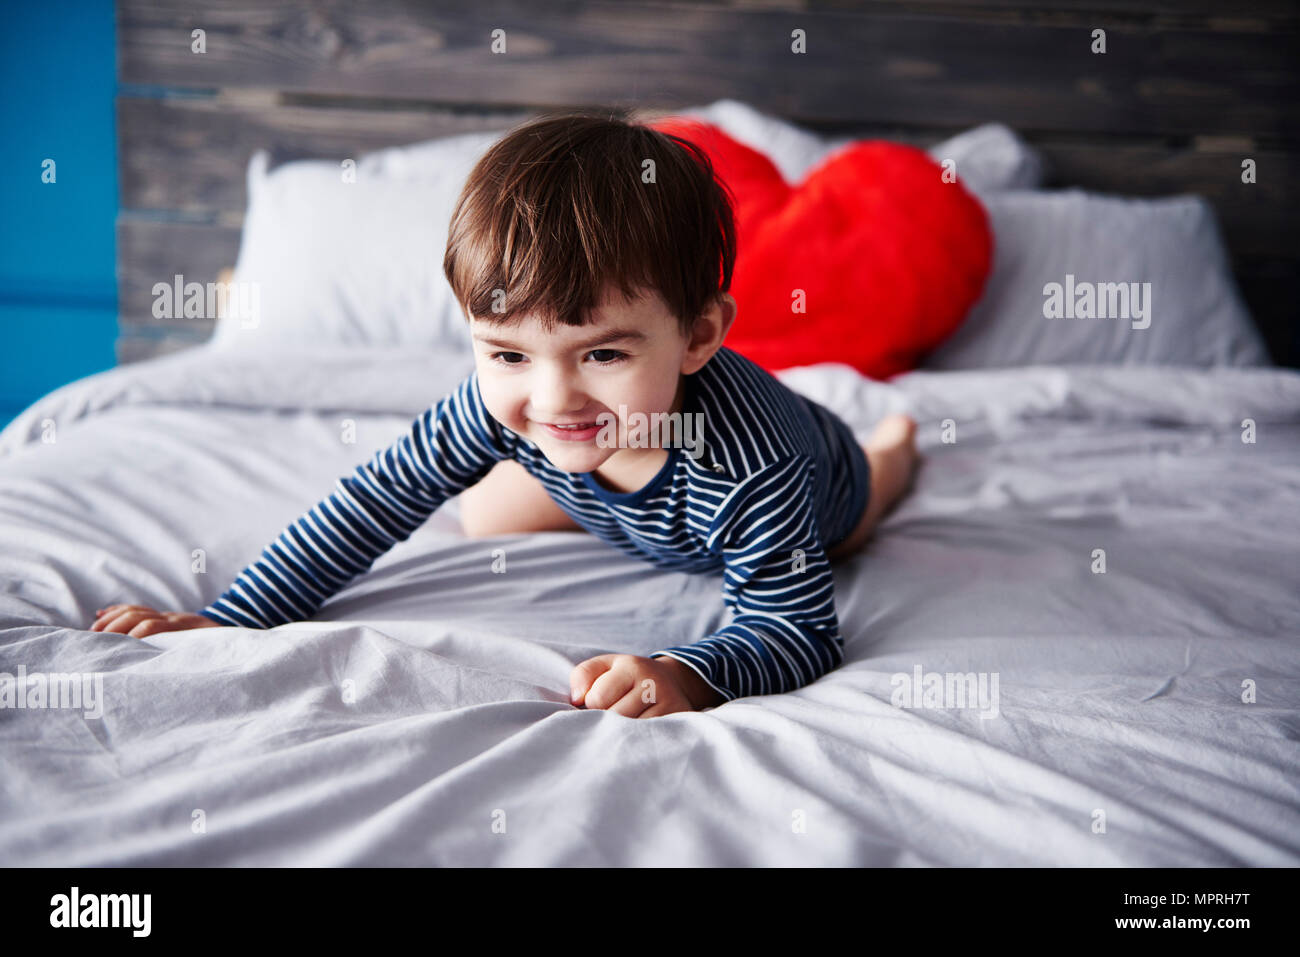 Portrait of smiling toddler on bed Banque D'Images